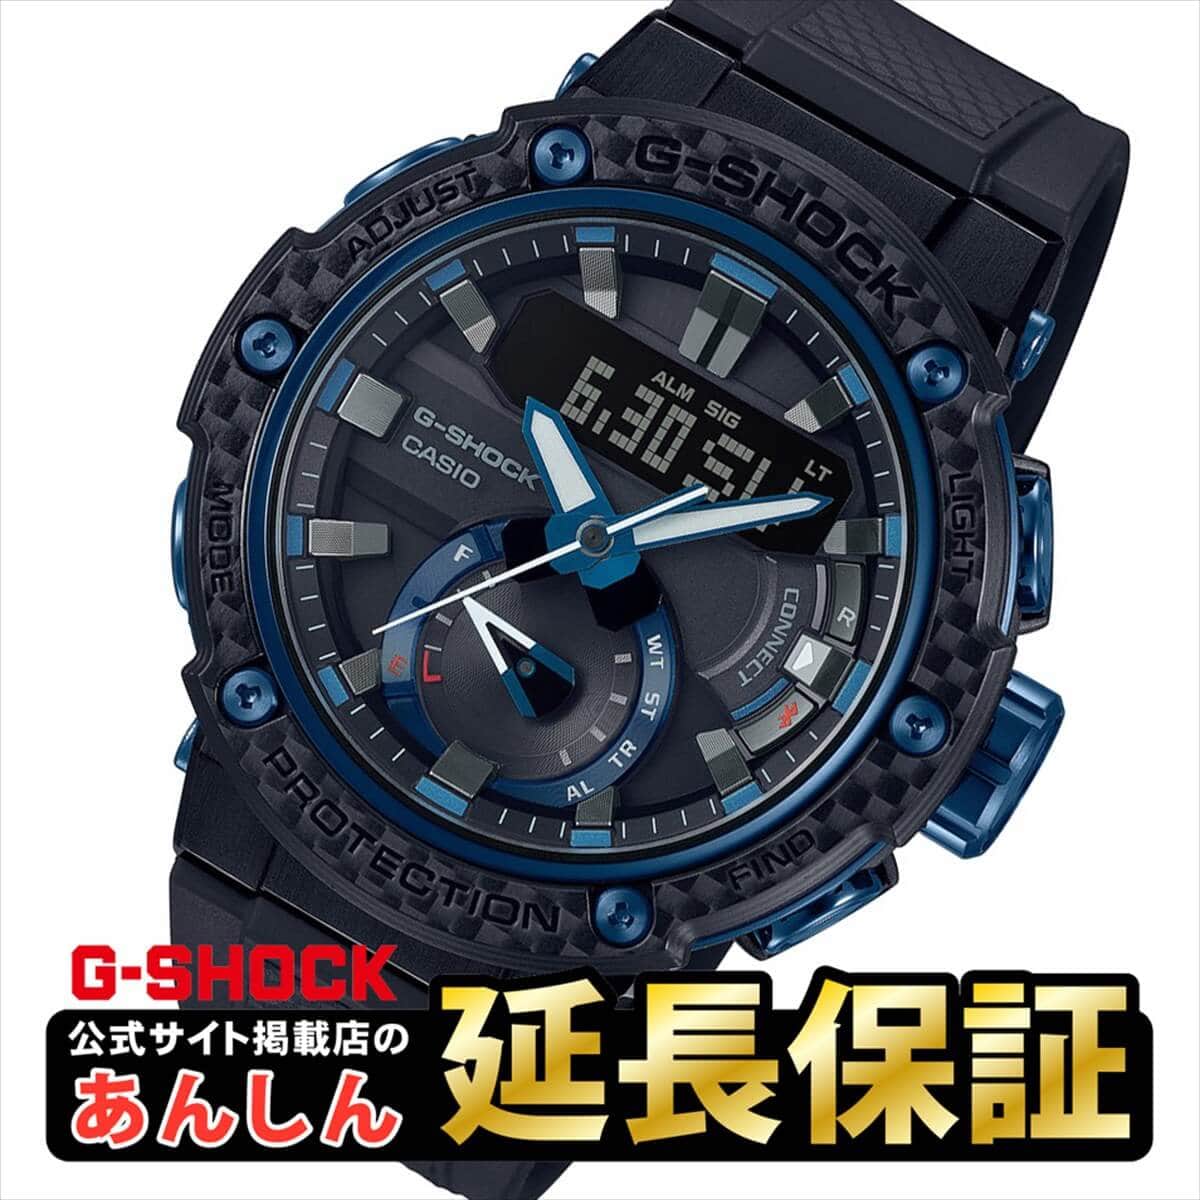 New]Casio G-Shock G-STEEL Carbon Bezel Smartphone Link Bluetooth Men's  Analog Watch GST-B200X-1A2JF - BE FORWARD Store